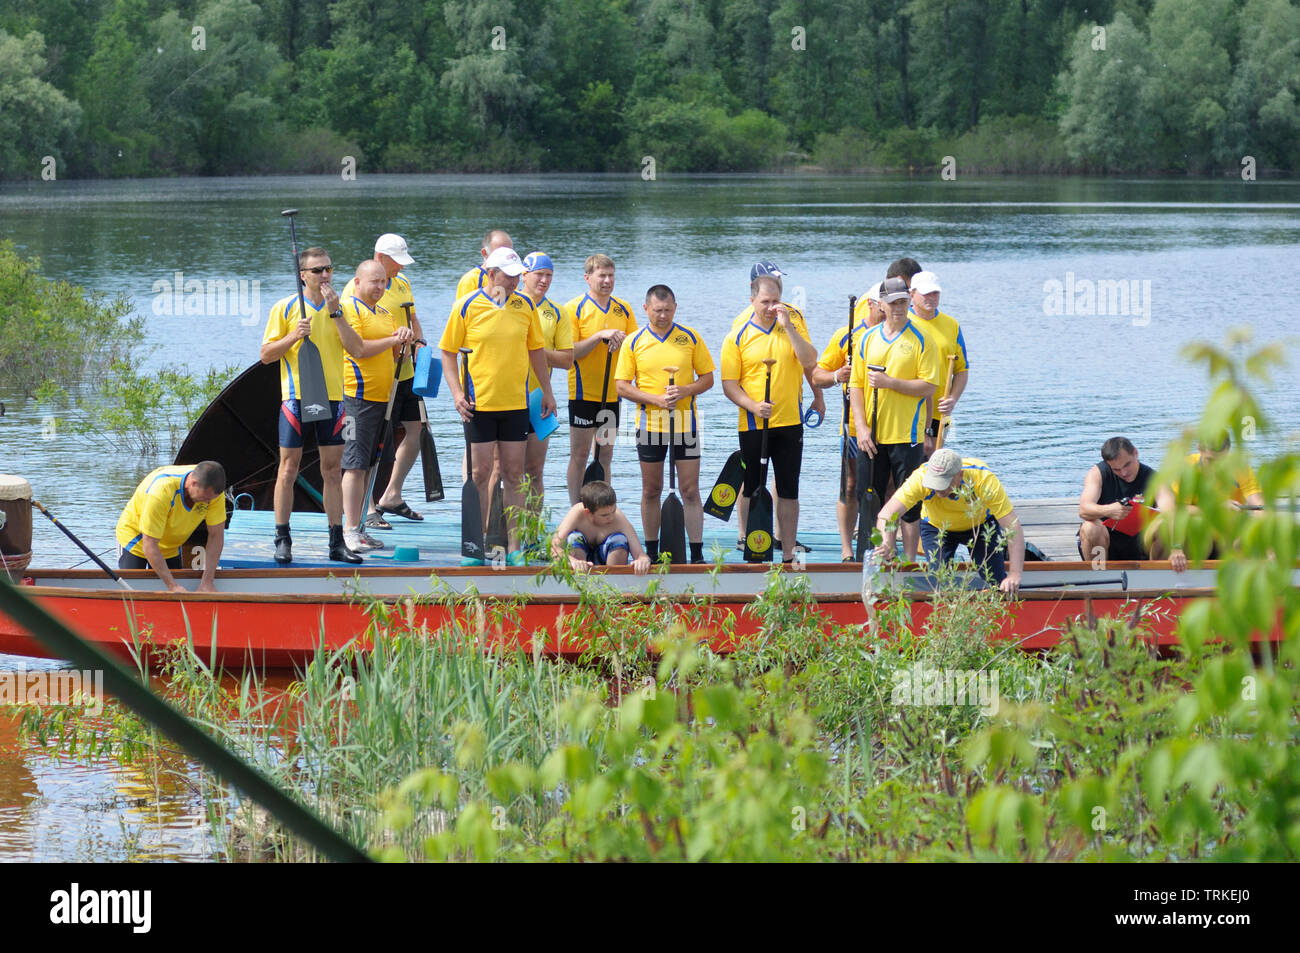 Oarsmen having break on a riverbank. Kiev oblast championship among amateurs. May 25, 2019. Kiev, Ukraine Stock Photo